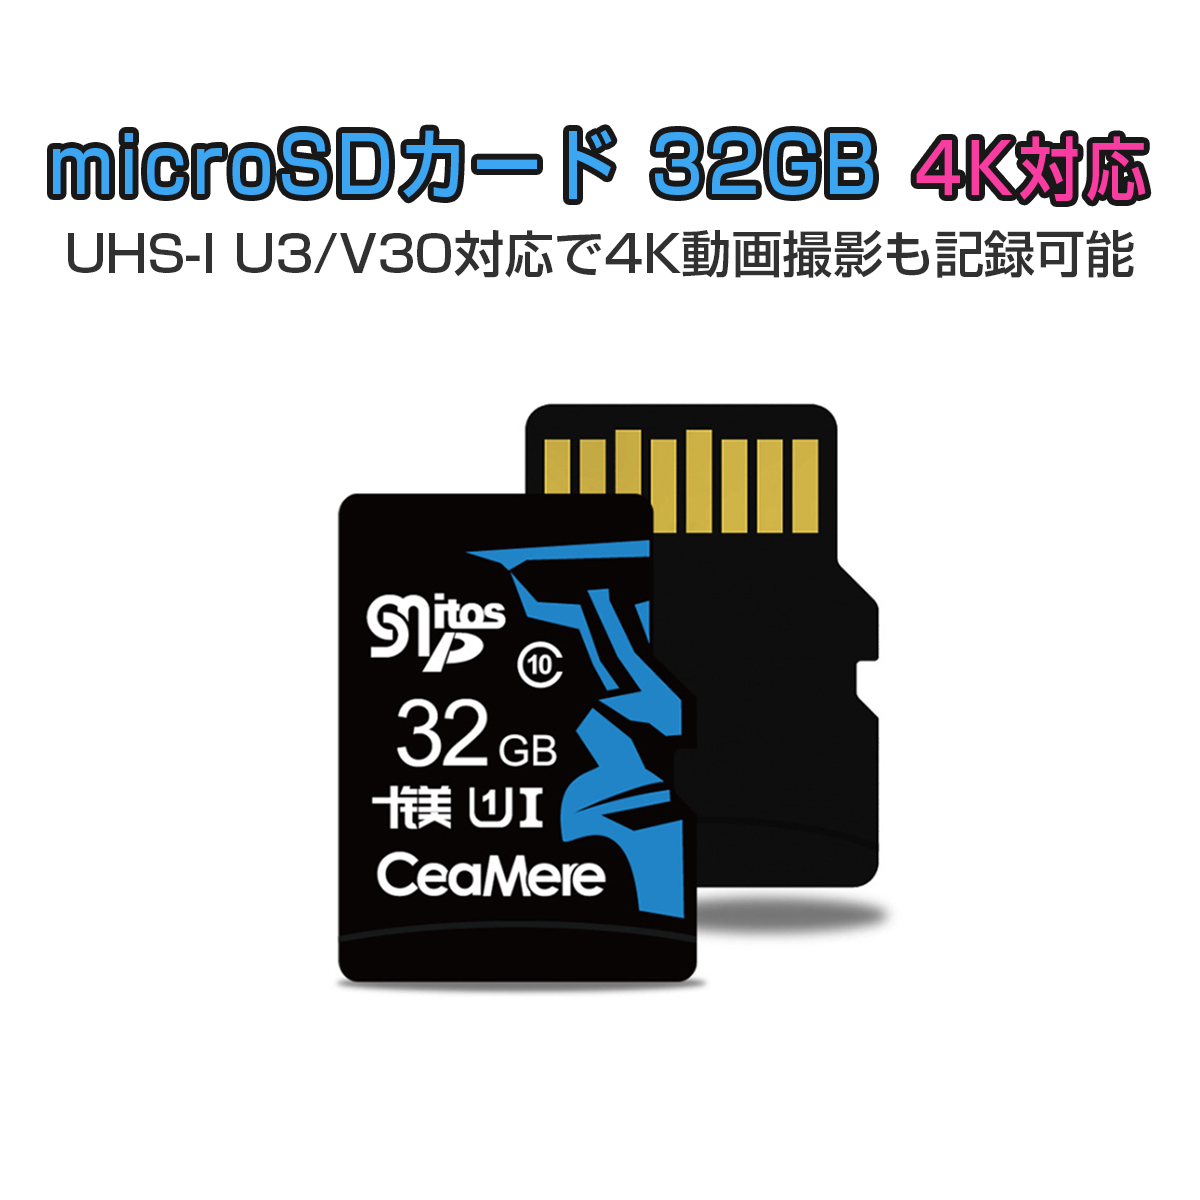 MicroSDカード 32GB UHS-I V30 超高速 最大90MB/sec 3D MLC NAND採用 ASチップ 高耐久 MicroSD マイクロSD microSDXC 300x SDカード変換アダプタ USBカードリーダー付き SDM便送料無料 1年保証